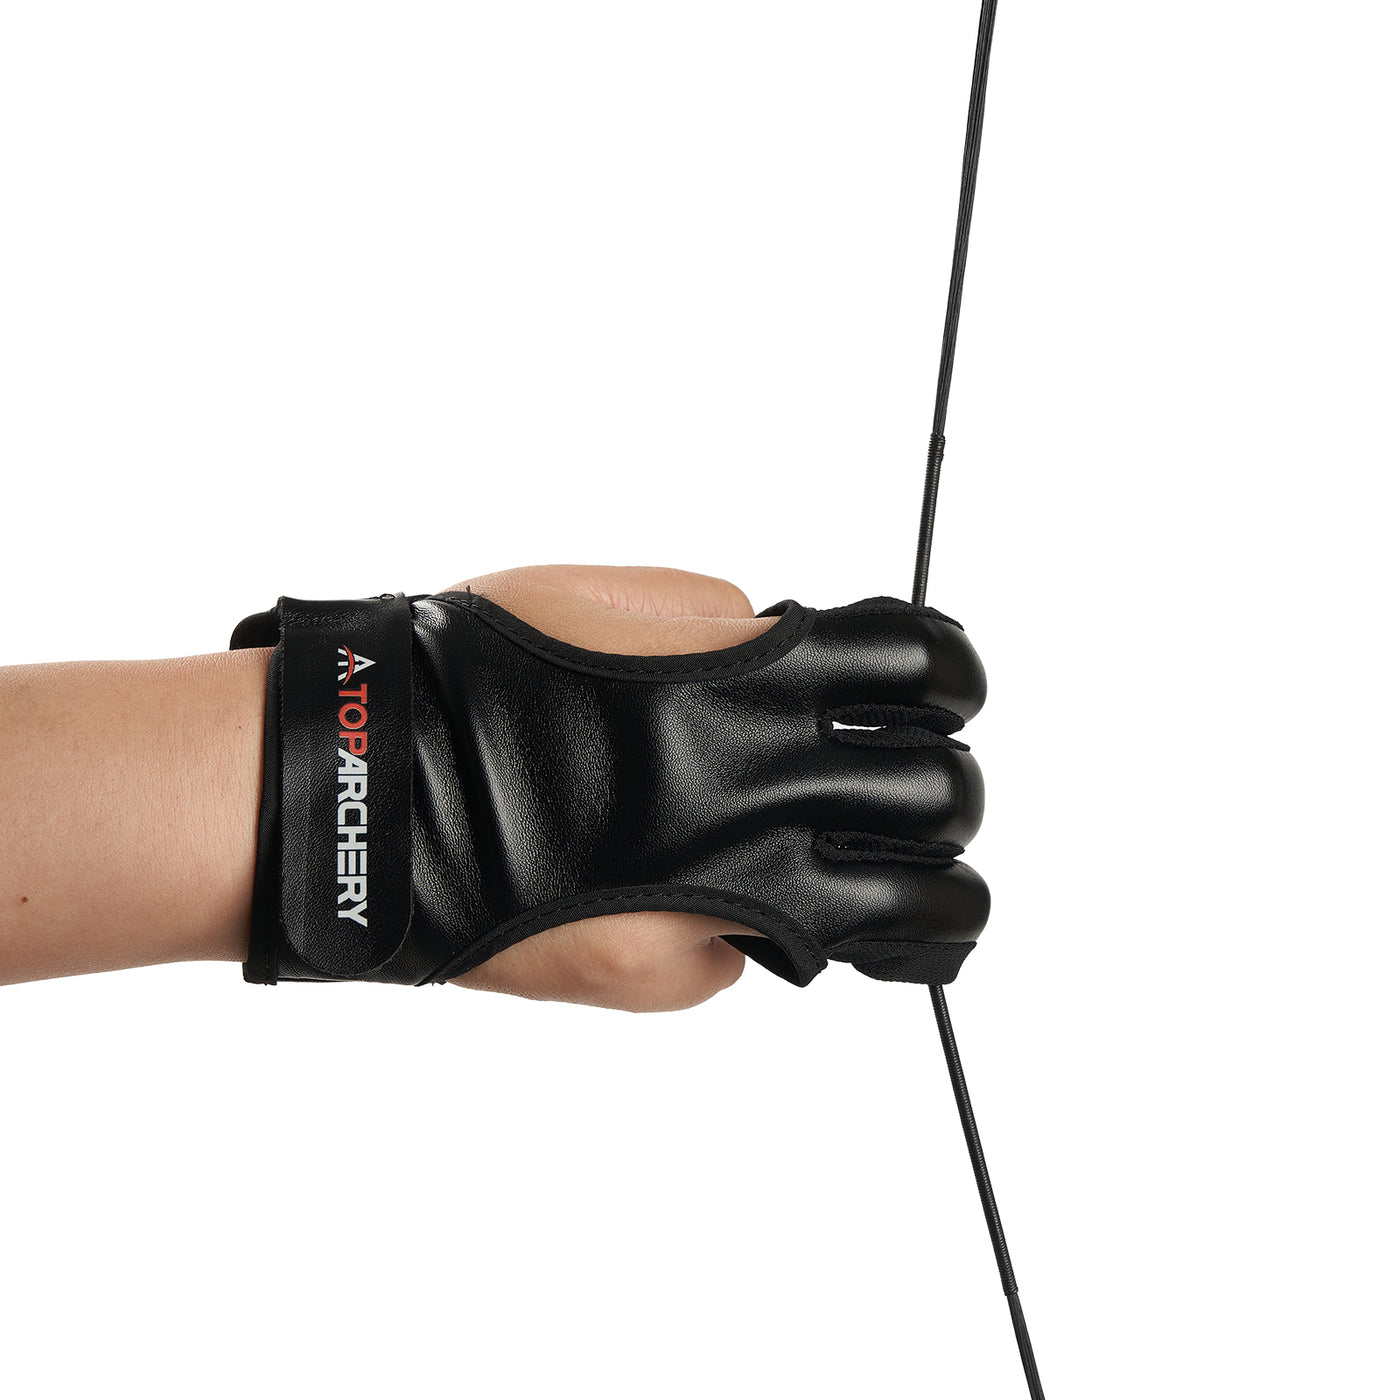 TopArchery Dark Shadow S/M/L/XL Size Black Finger Tab Glove PU Leather Archery Hunting Practice